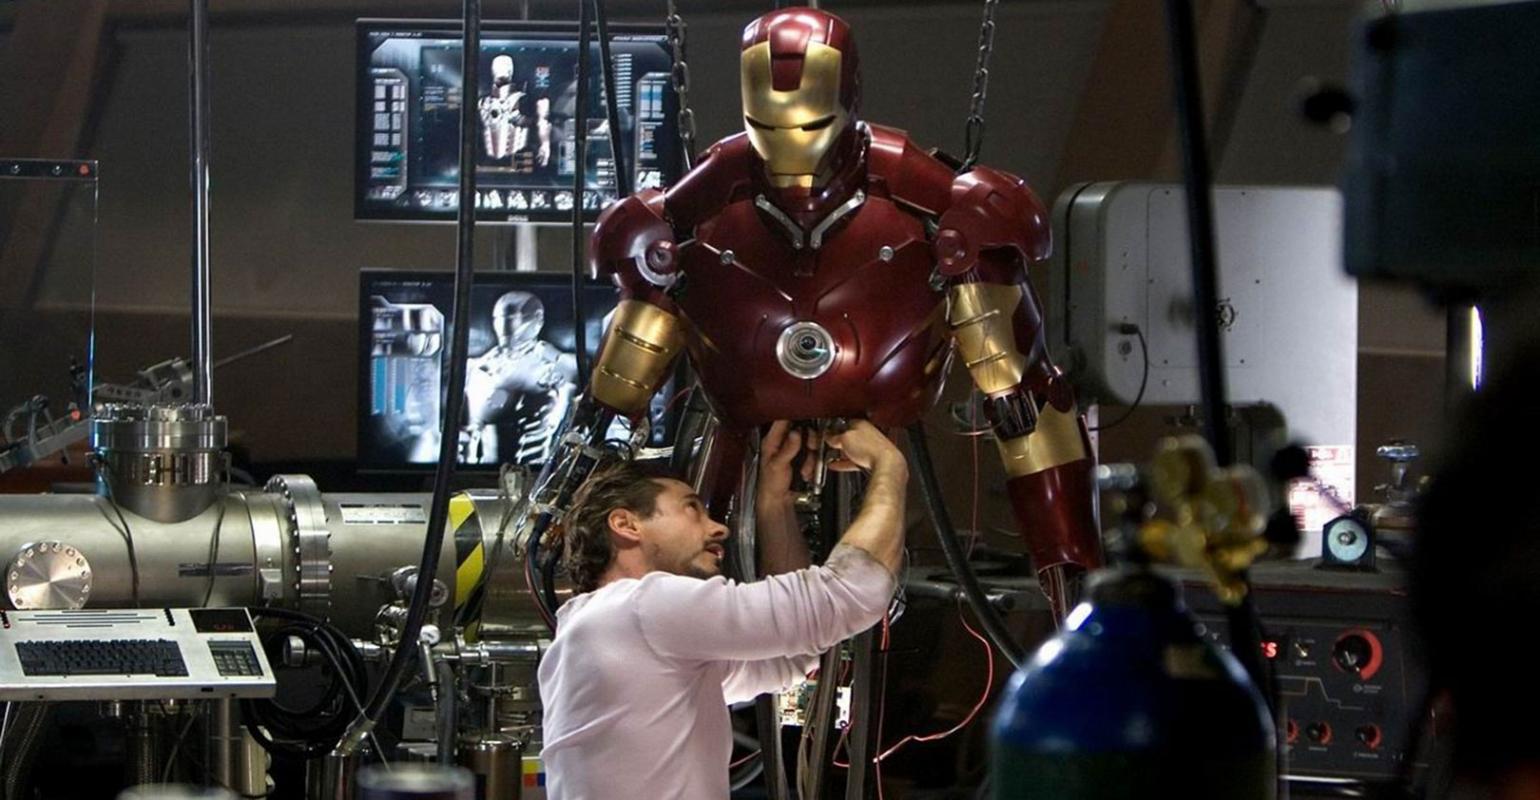 Iron Man The engineer who became a superhero   Penn Today